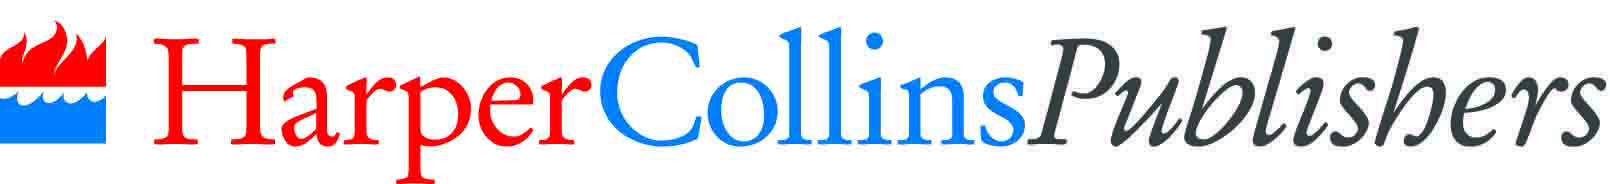 HarperCollins Logo - Harper collins Logos